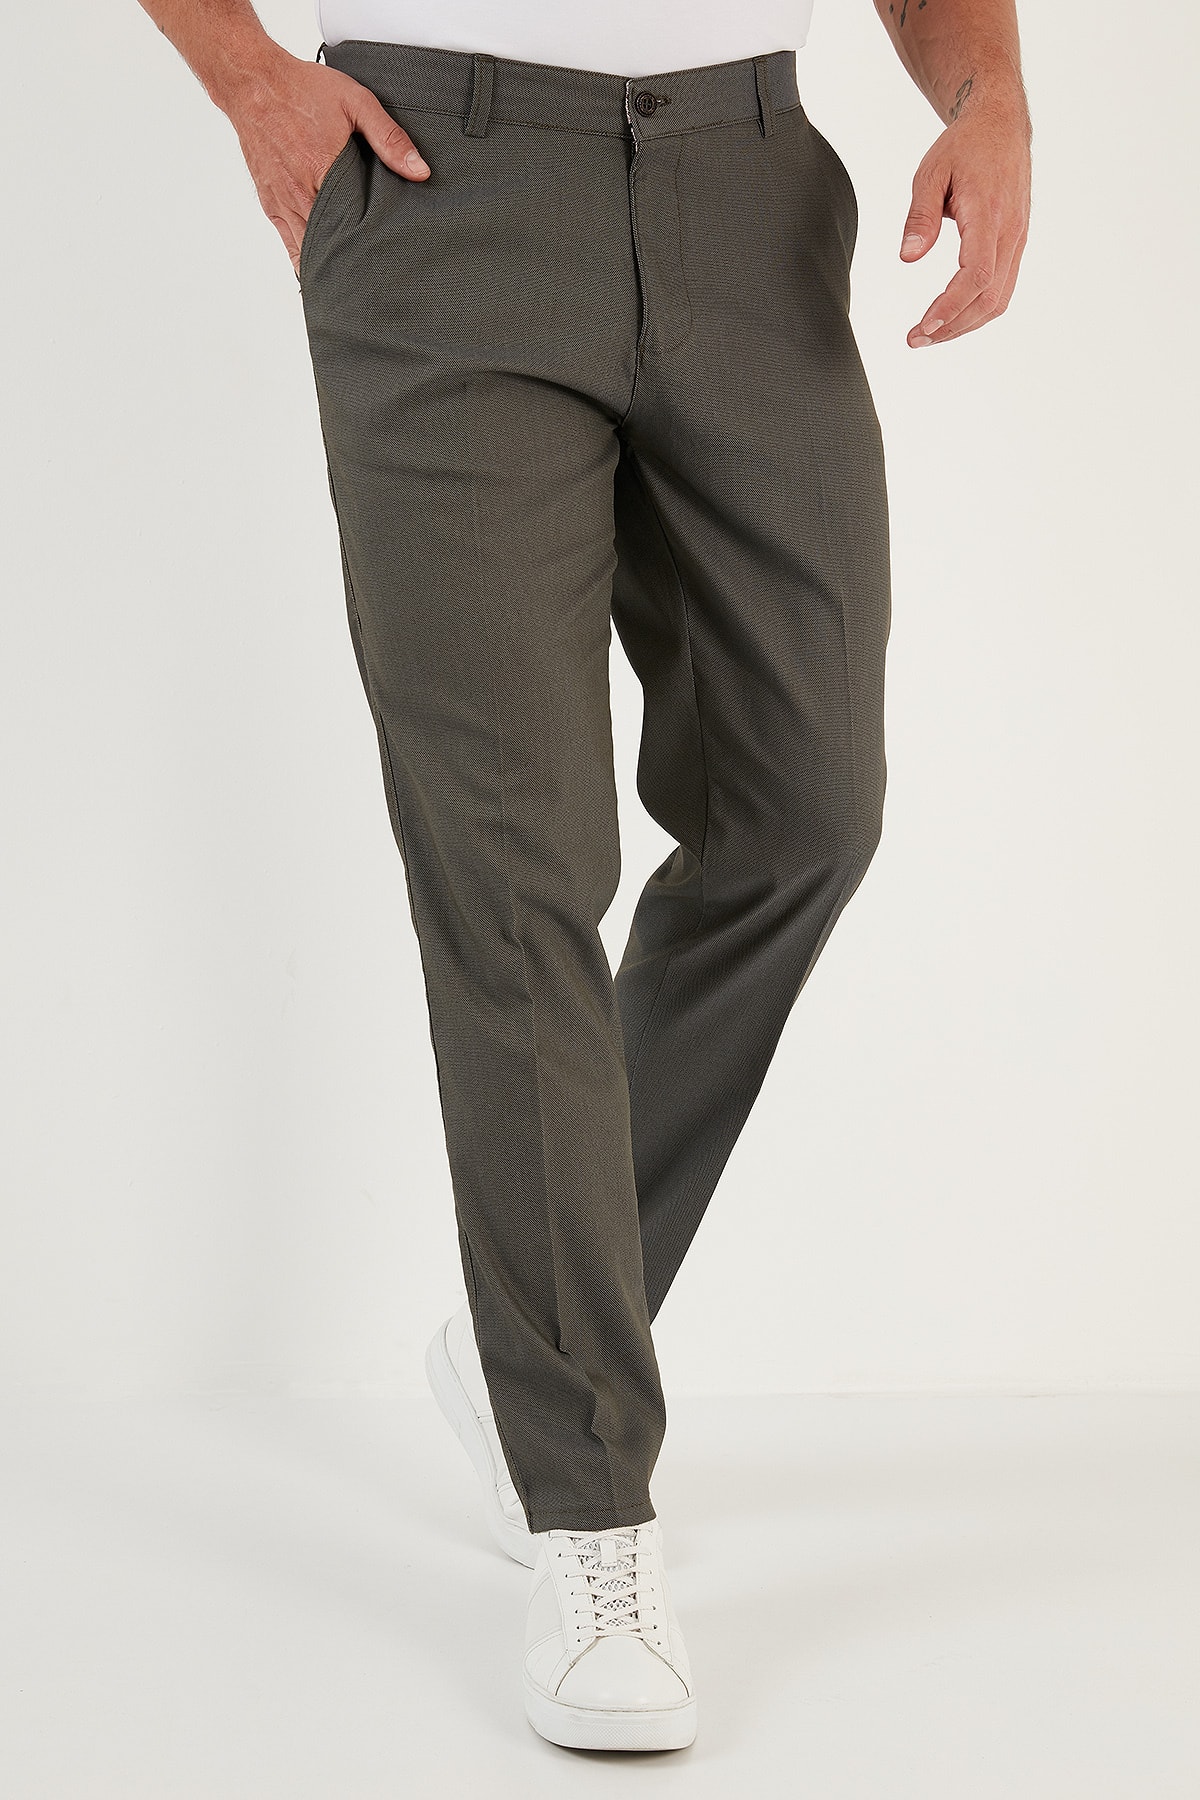 Kurus Black Gold Cotton Bland Regular Fit Trouser For Mens-saigonsouth.com.vn